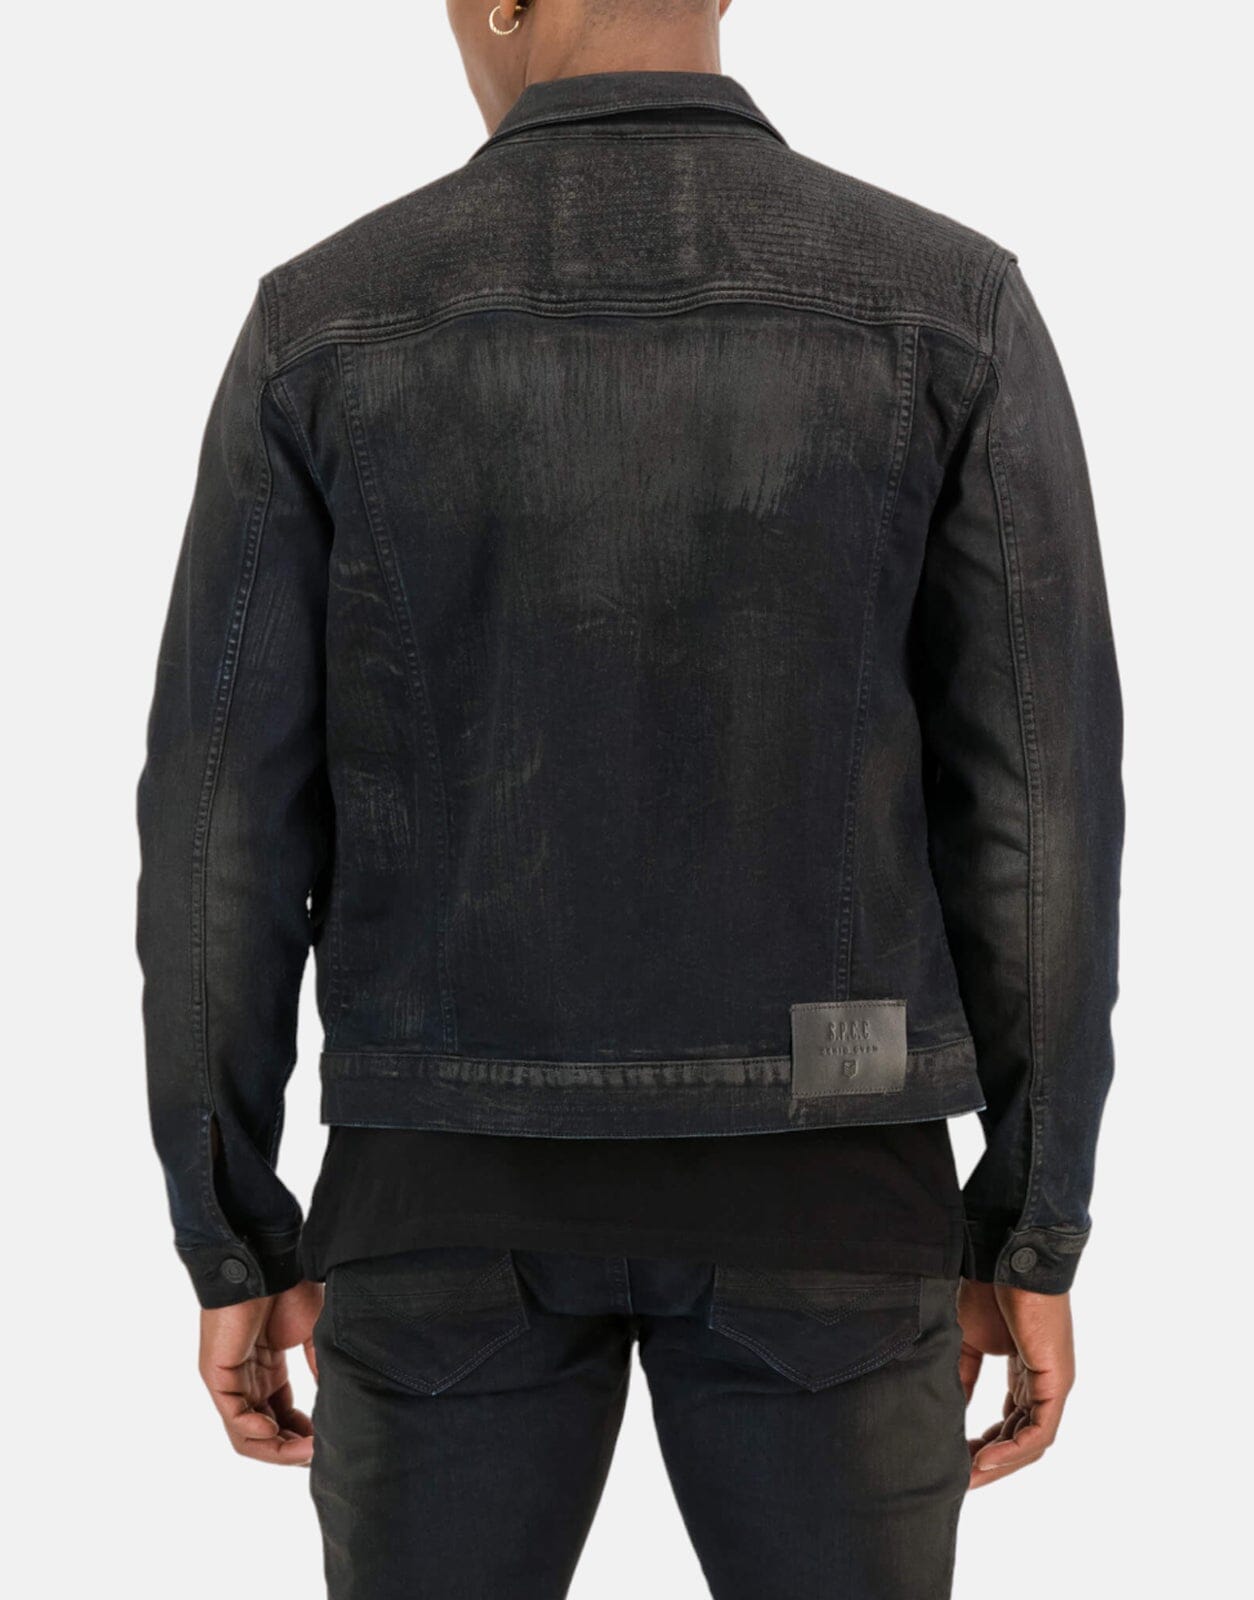 SPCC Maverick Black Jacket - Subwear